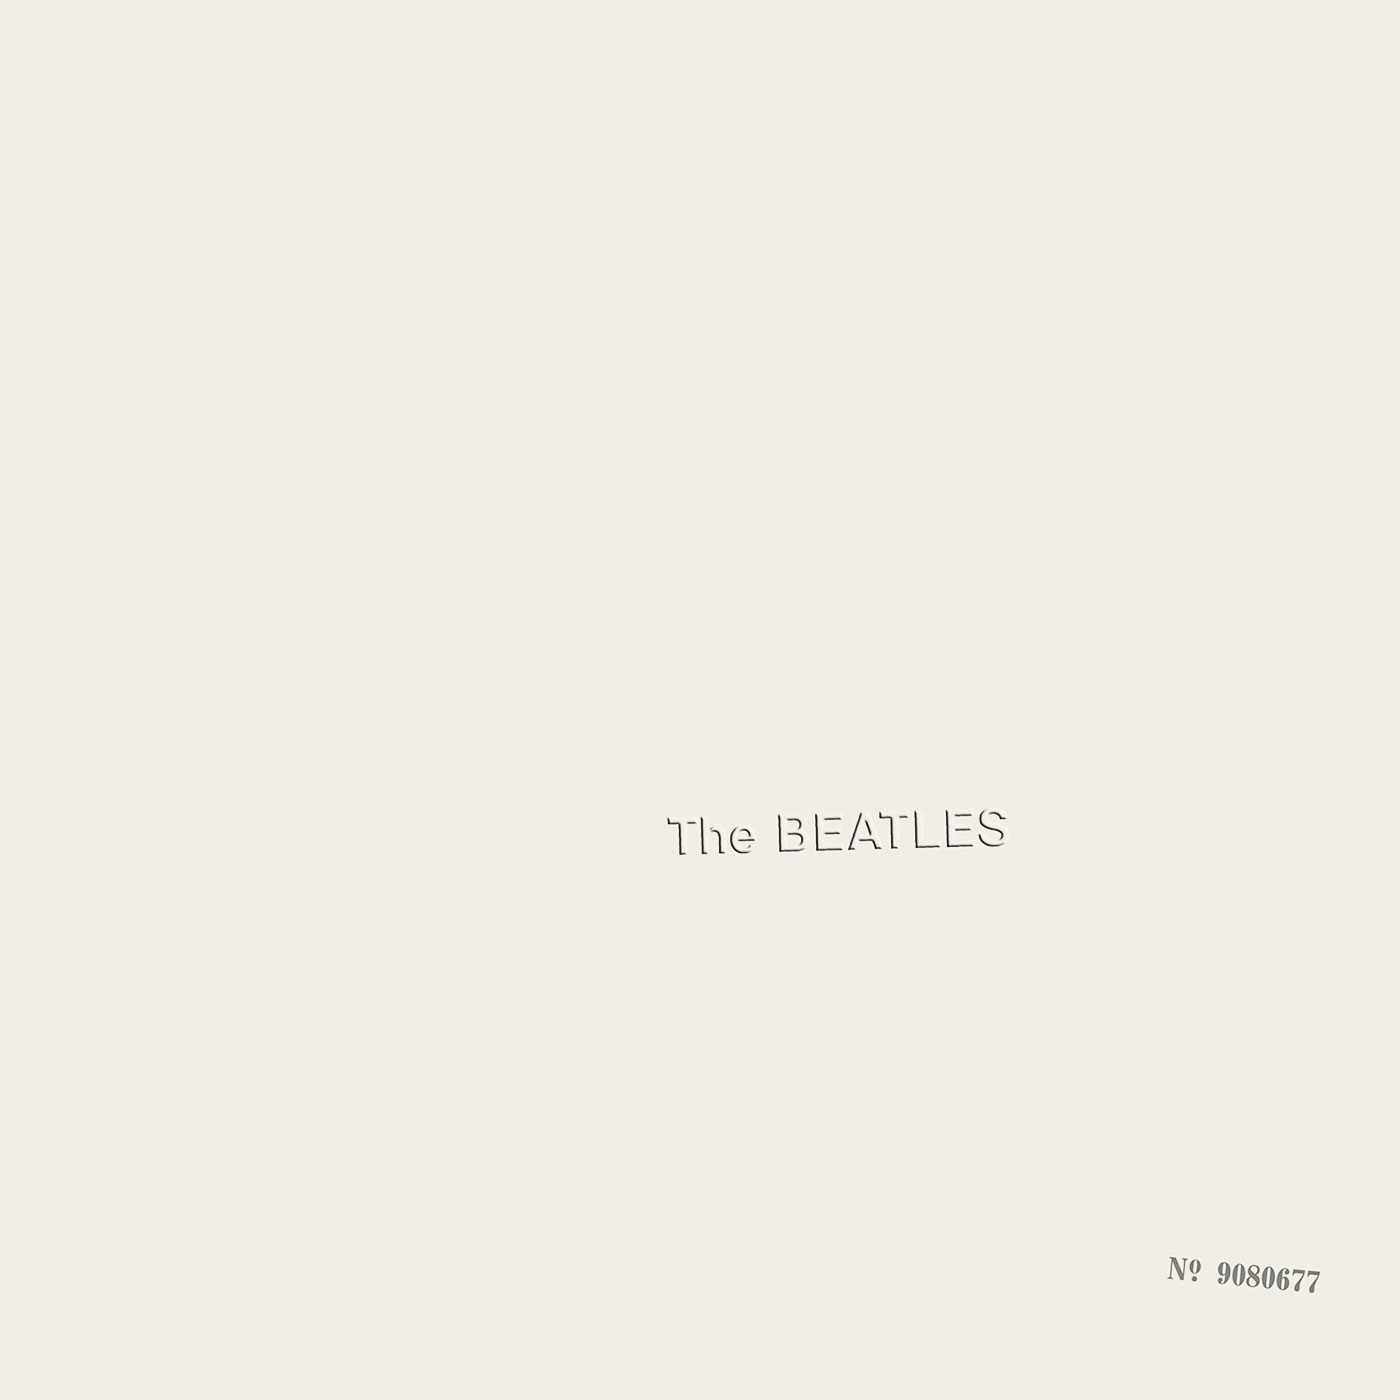 134 The Beatles – The Beatles (White Album)